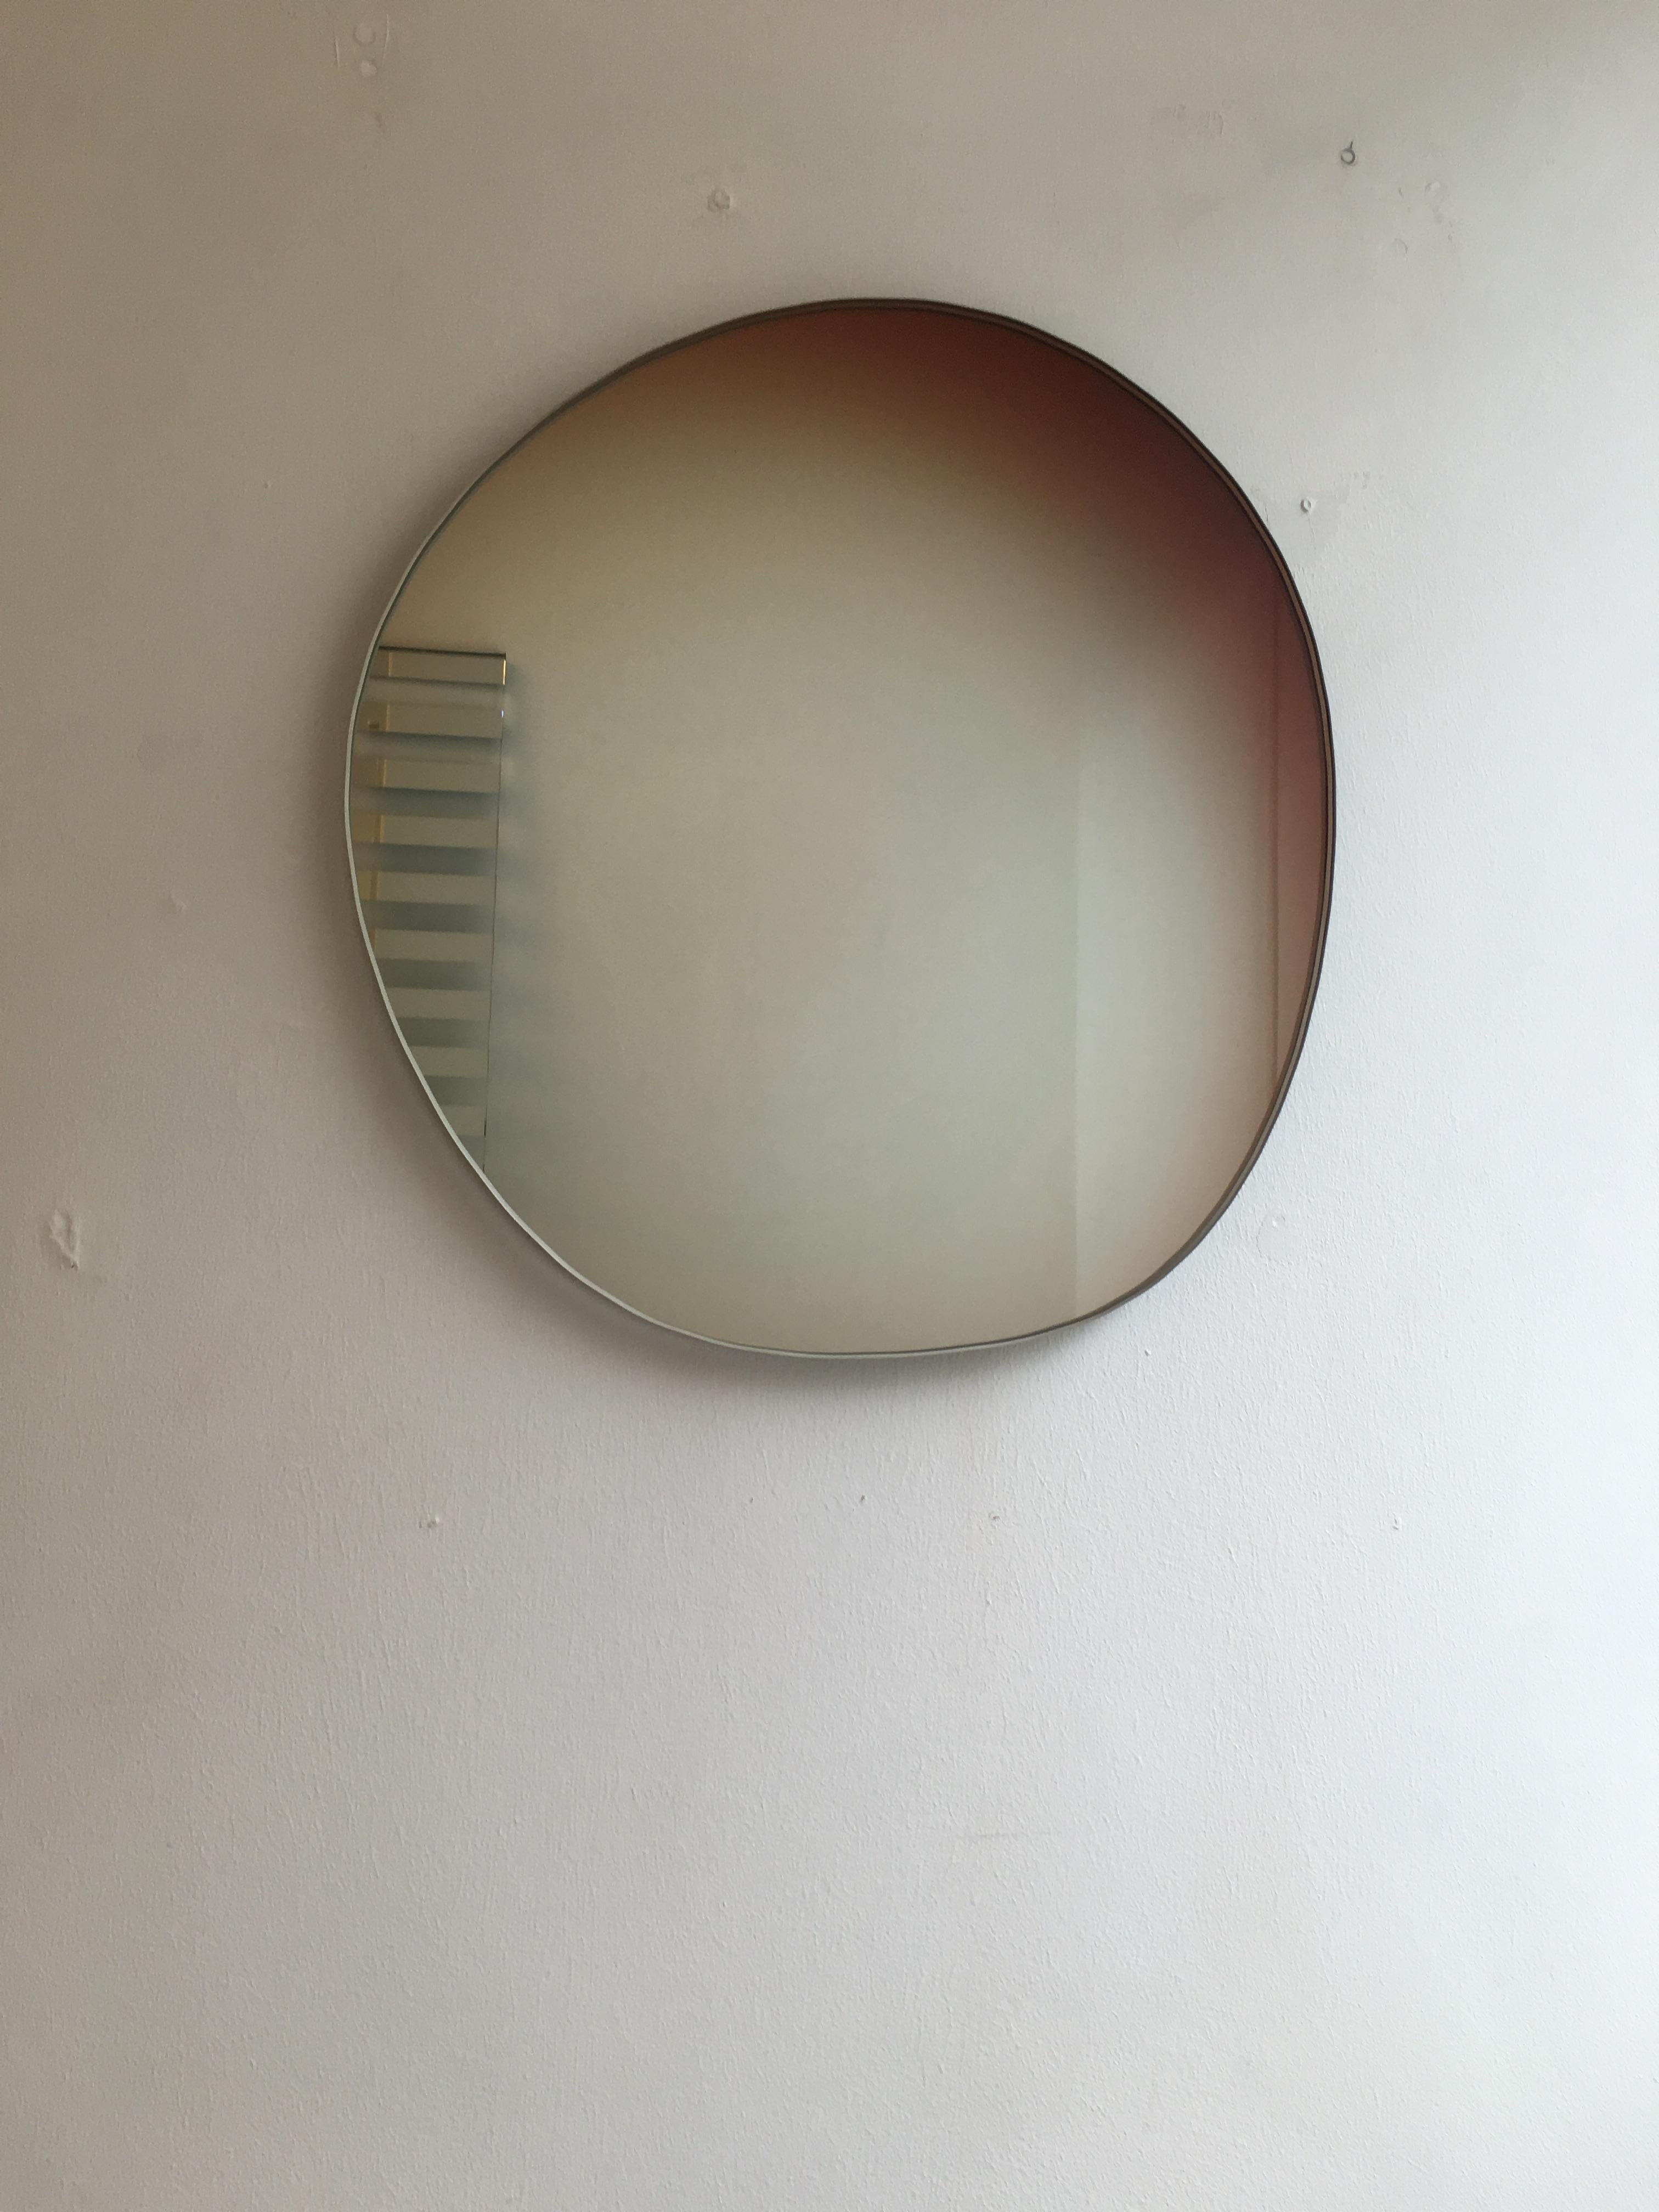 Dutch Custom Off Round Hue #1 Wall Mirror in Sunrise, by Sabine Marcelis